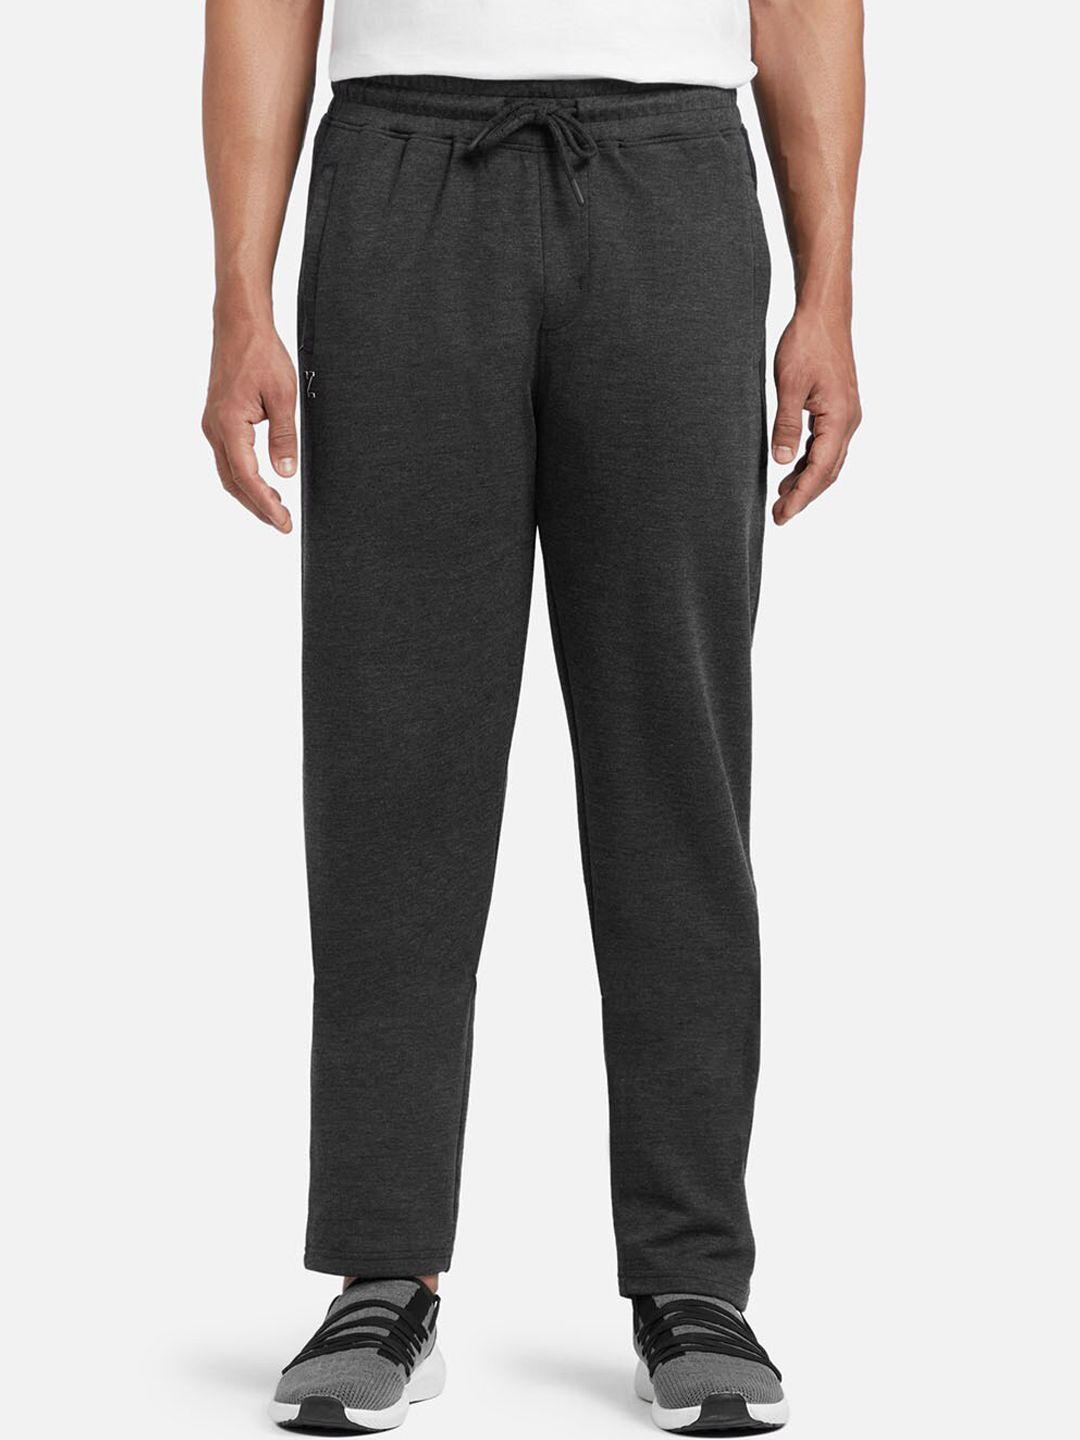 xyxx-men-grey-cotton-rich-solid-track-pants